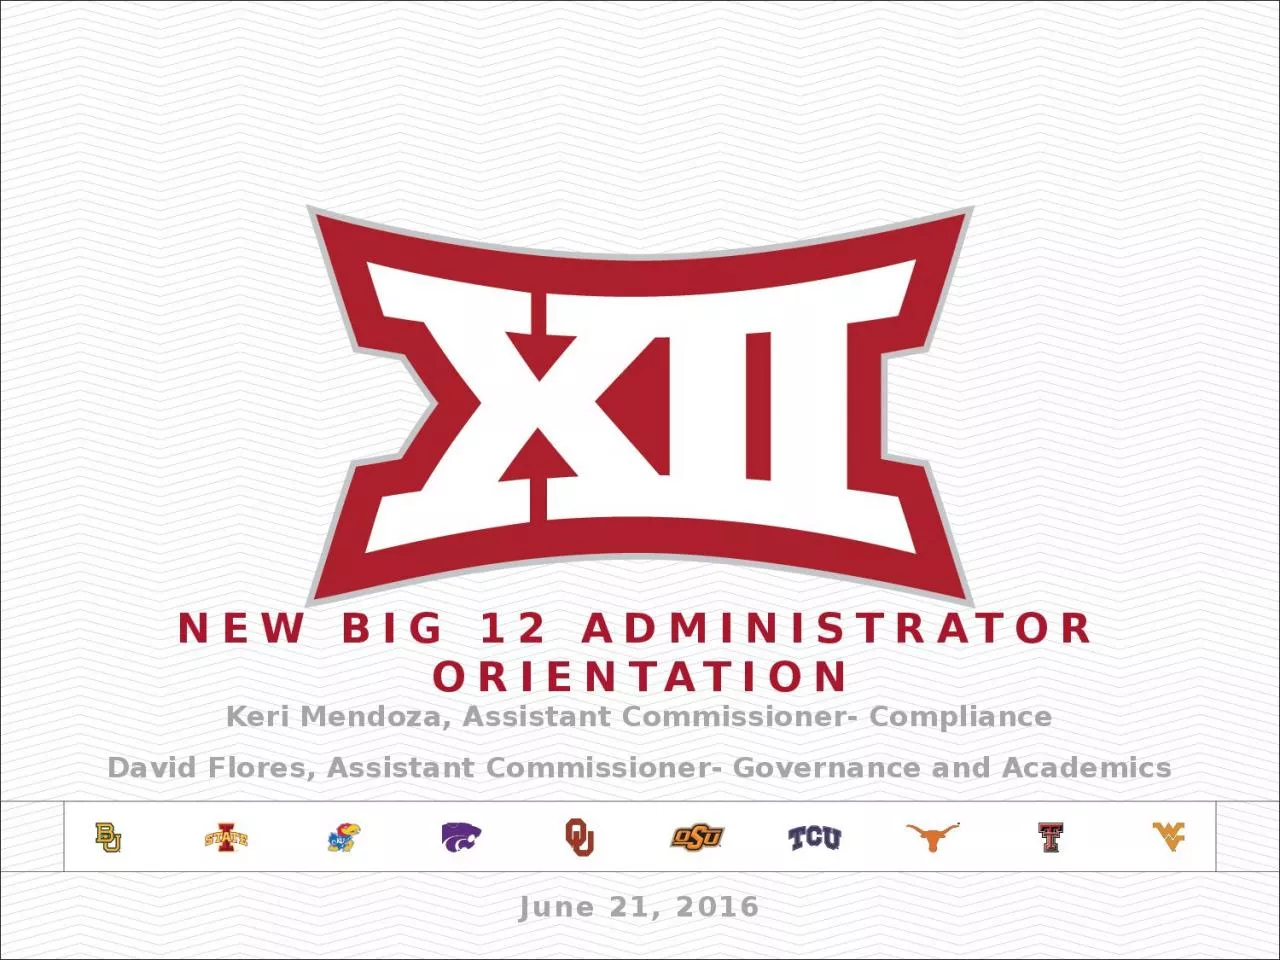 New Big 12 Administrator Orientation